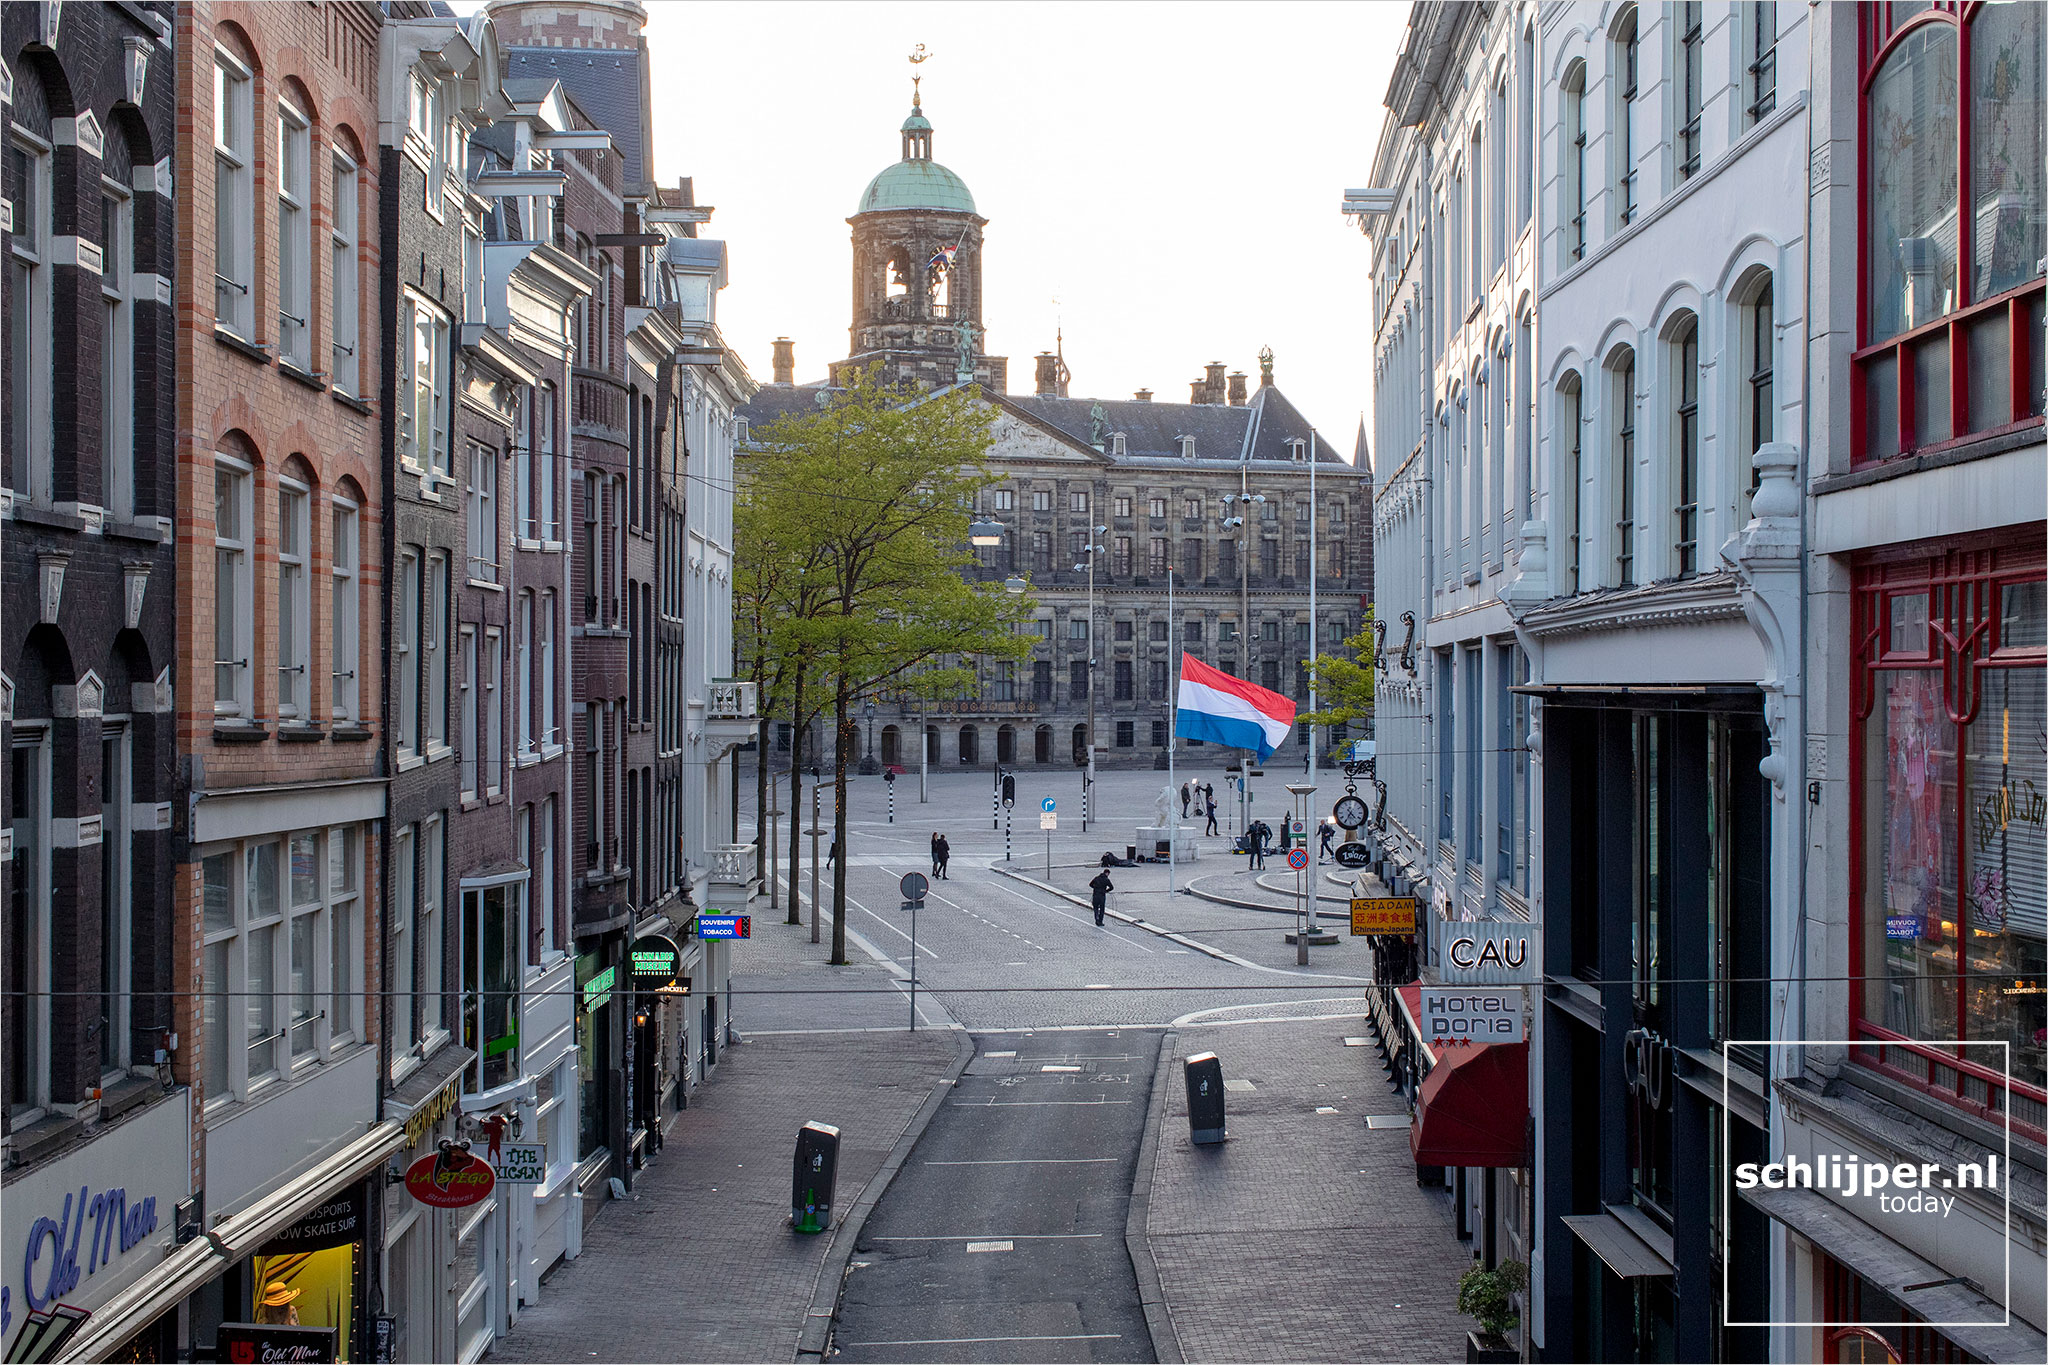 Nederland, Amsterdam, 4 mei 2020